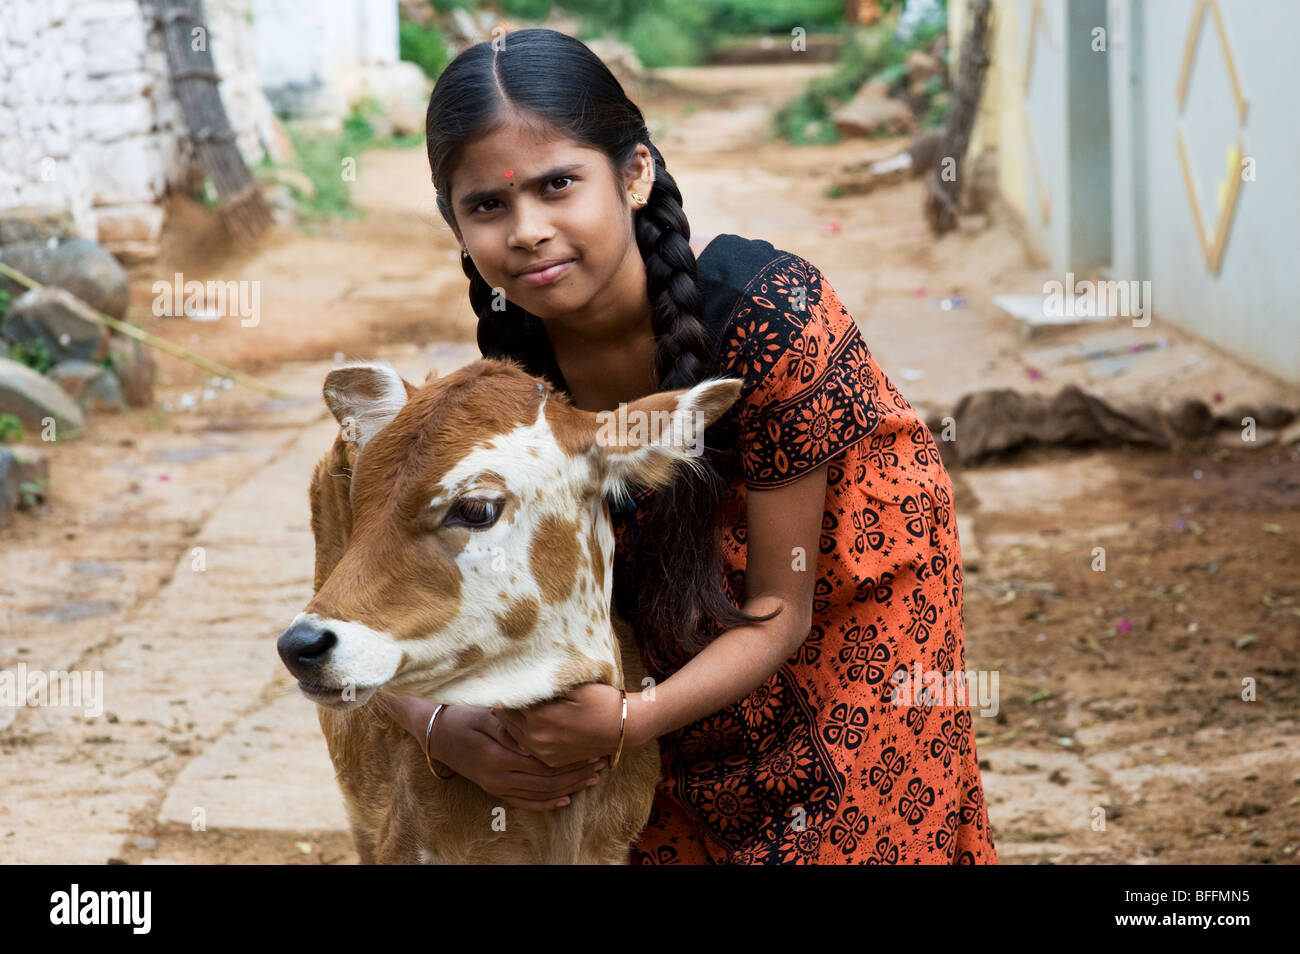 Young Indian village girl hugging a calf in a rural Indian village. Andhra Pradesh, India Stock Photo